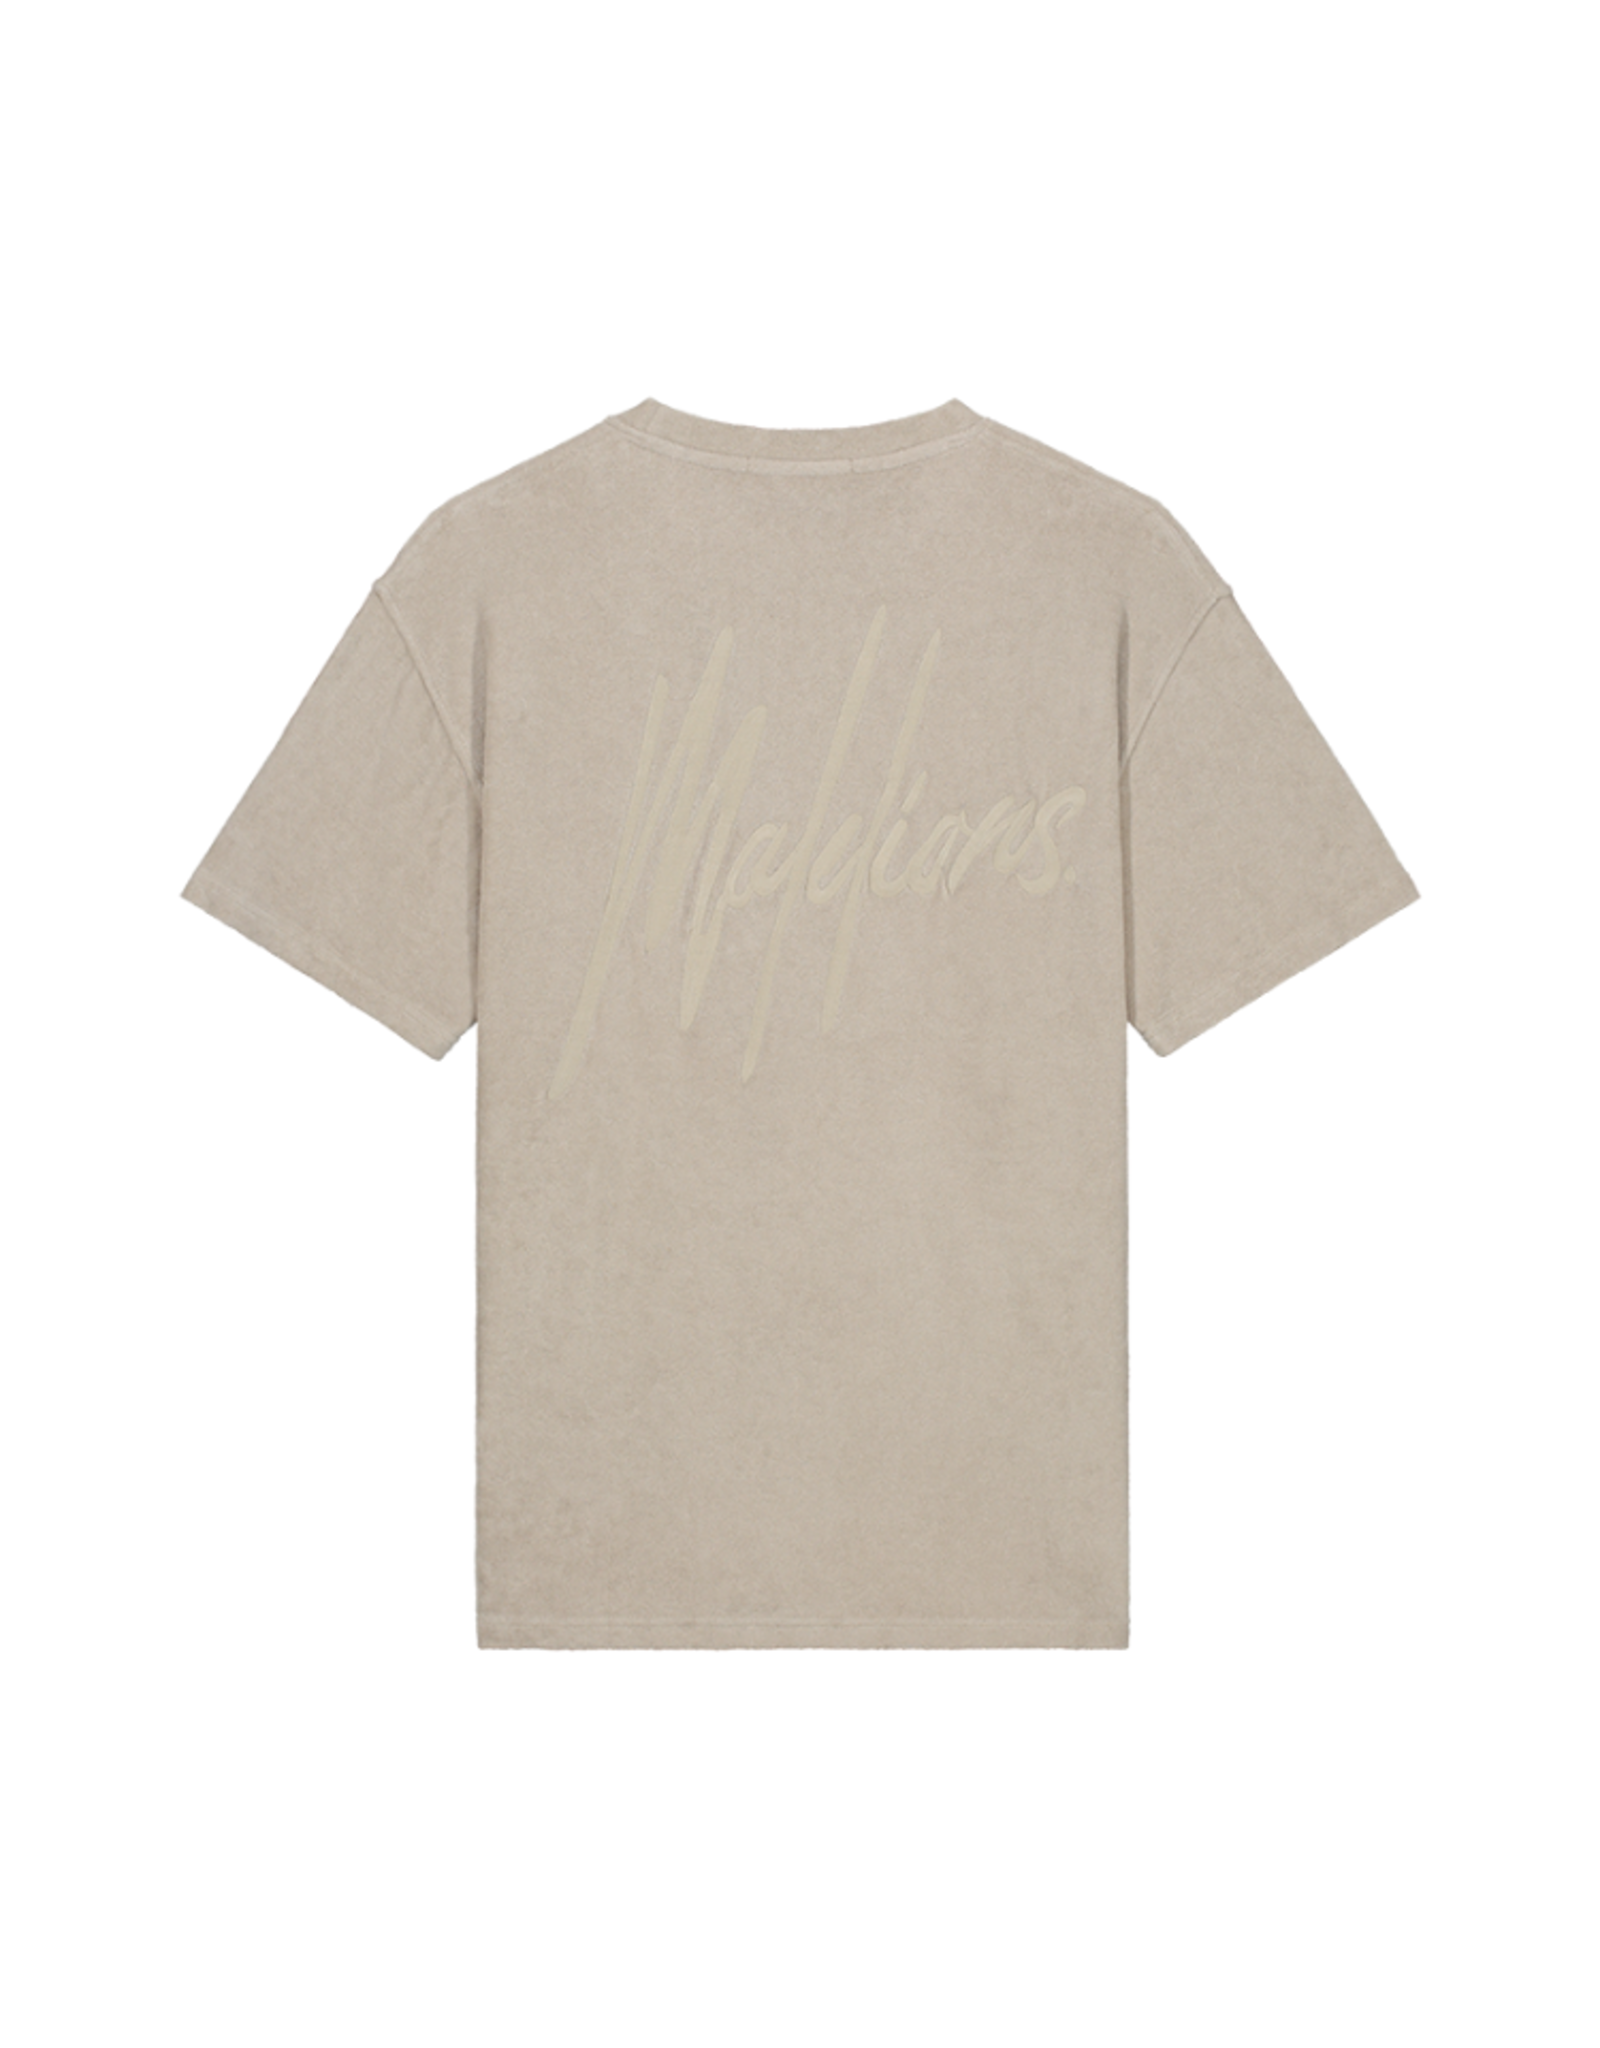 Malelions Signature Toweling T-Shirt